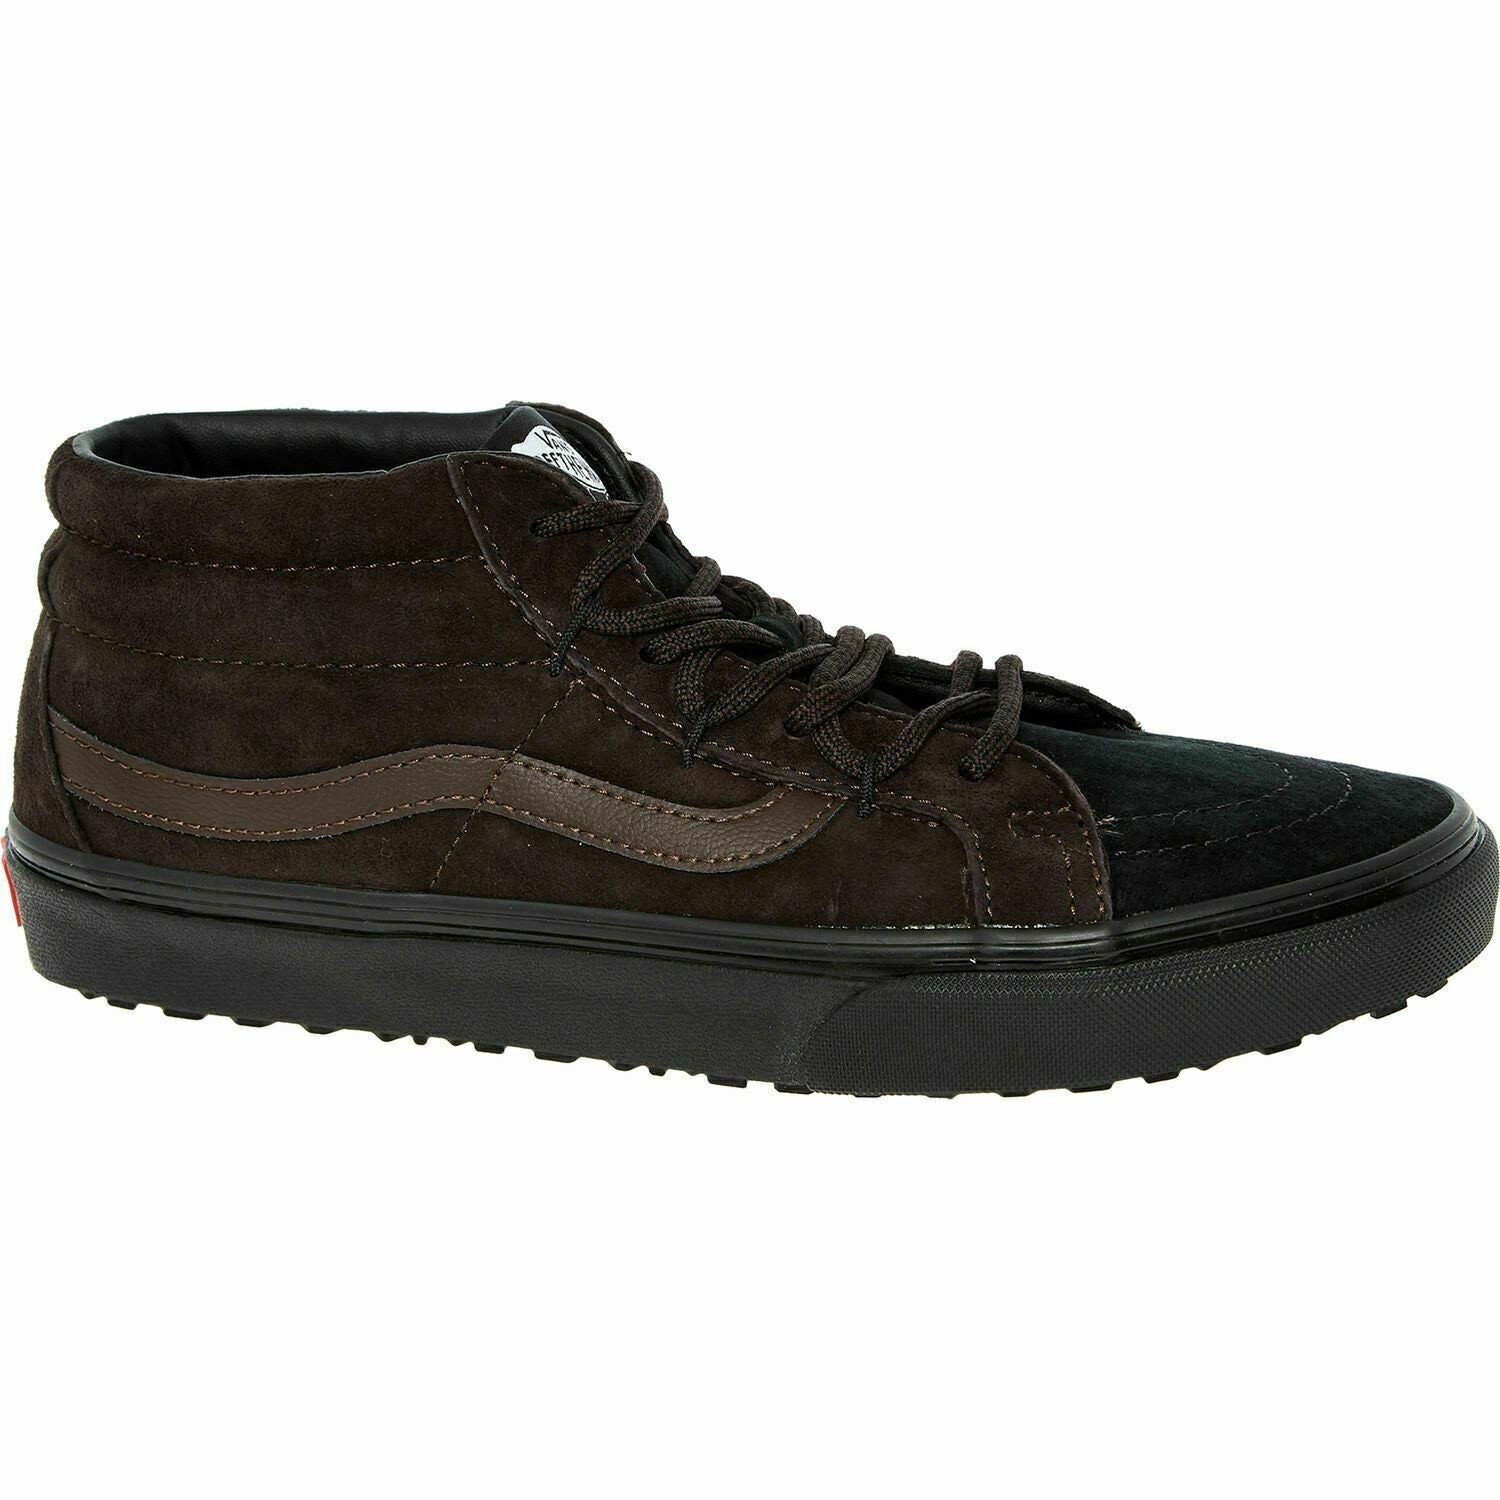 VANS: SK8-MID REISSUE Boys' Suede Leather Shoes, Brown/Black, UK junior 5